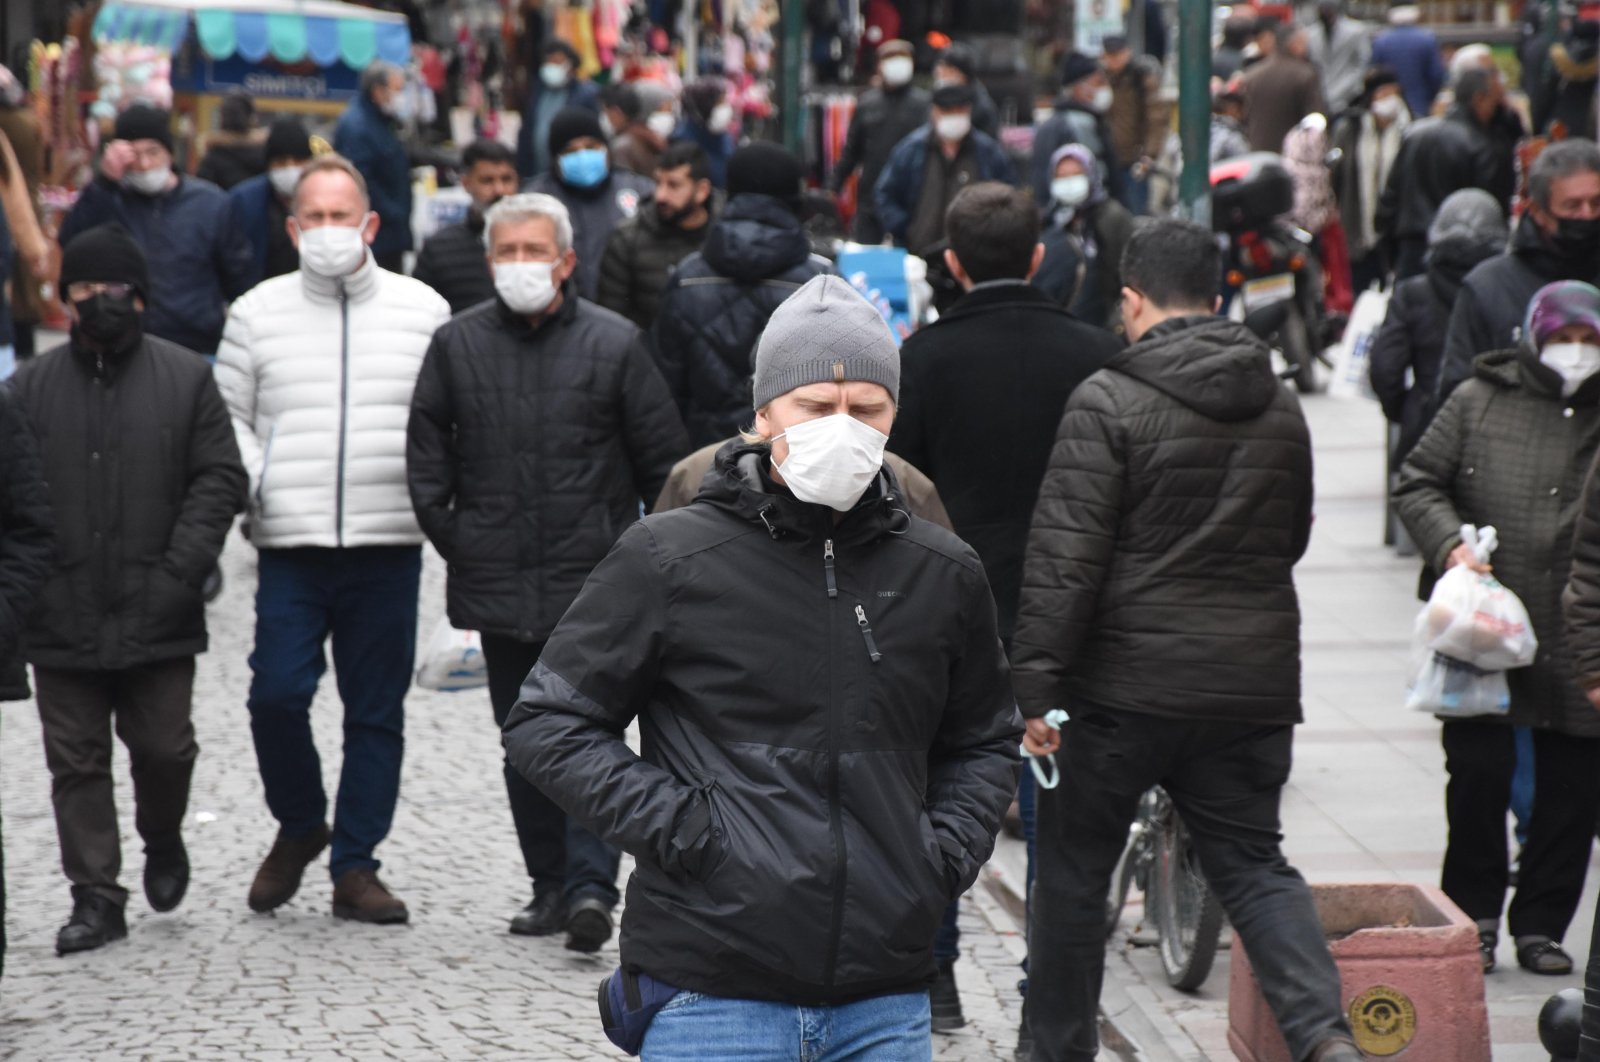 People wearing protective masks against COVID-19 walk on a street in Eskişehir, central Turkey, Jan. 10, 2022. (DHA Photo)